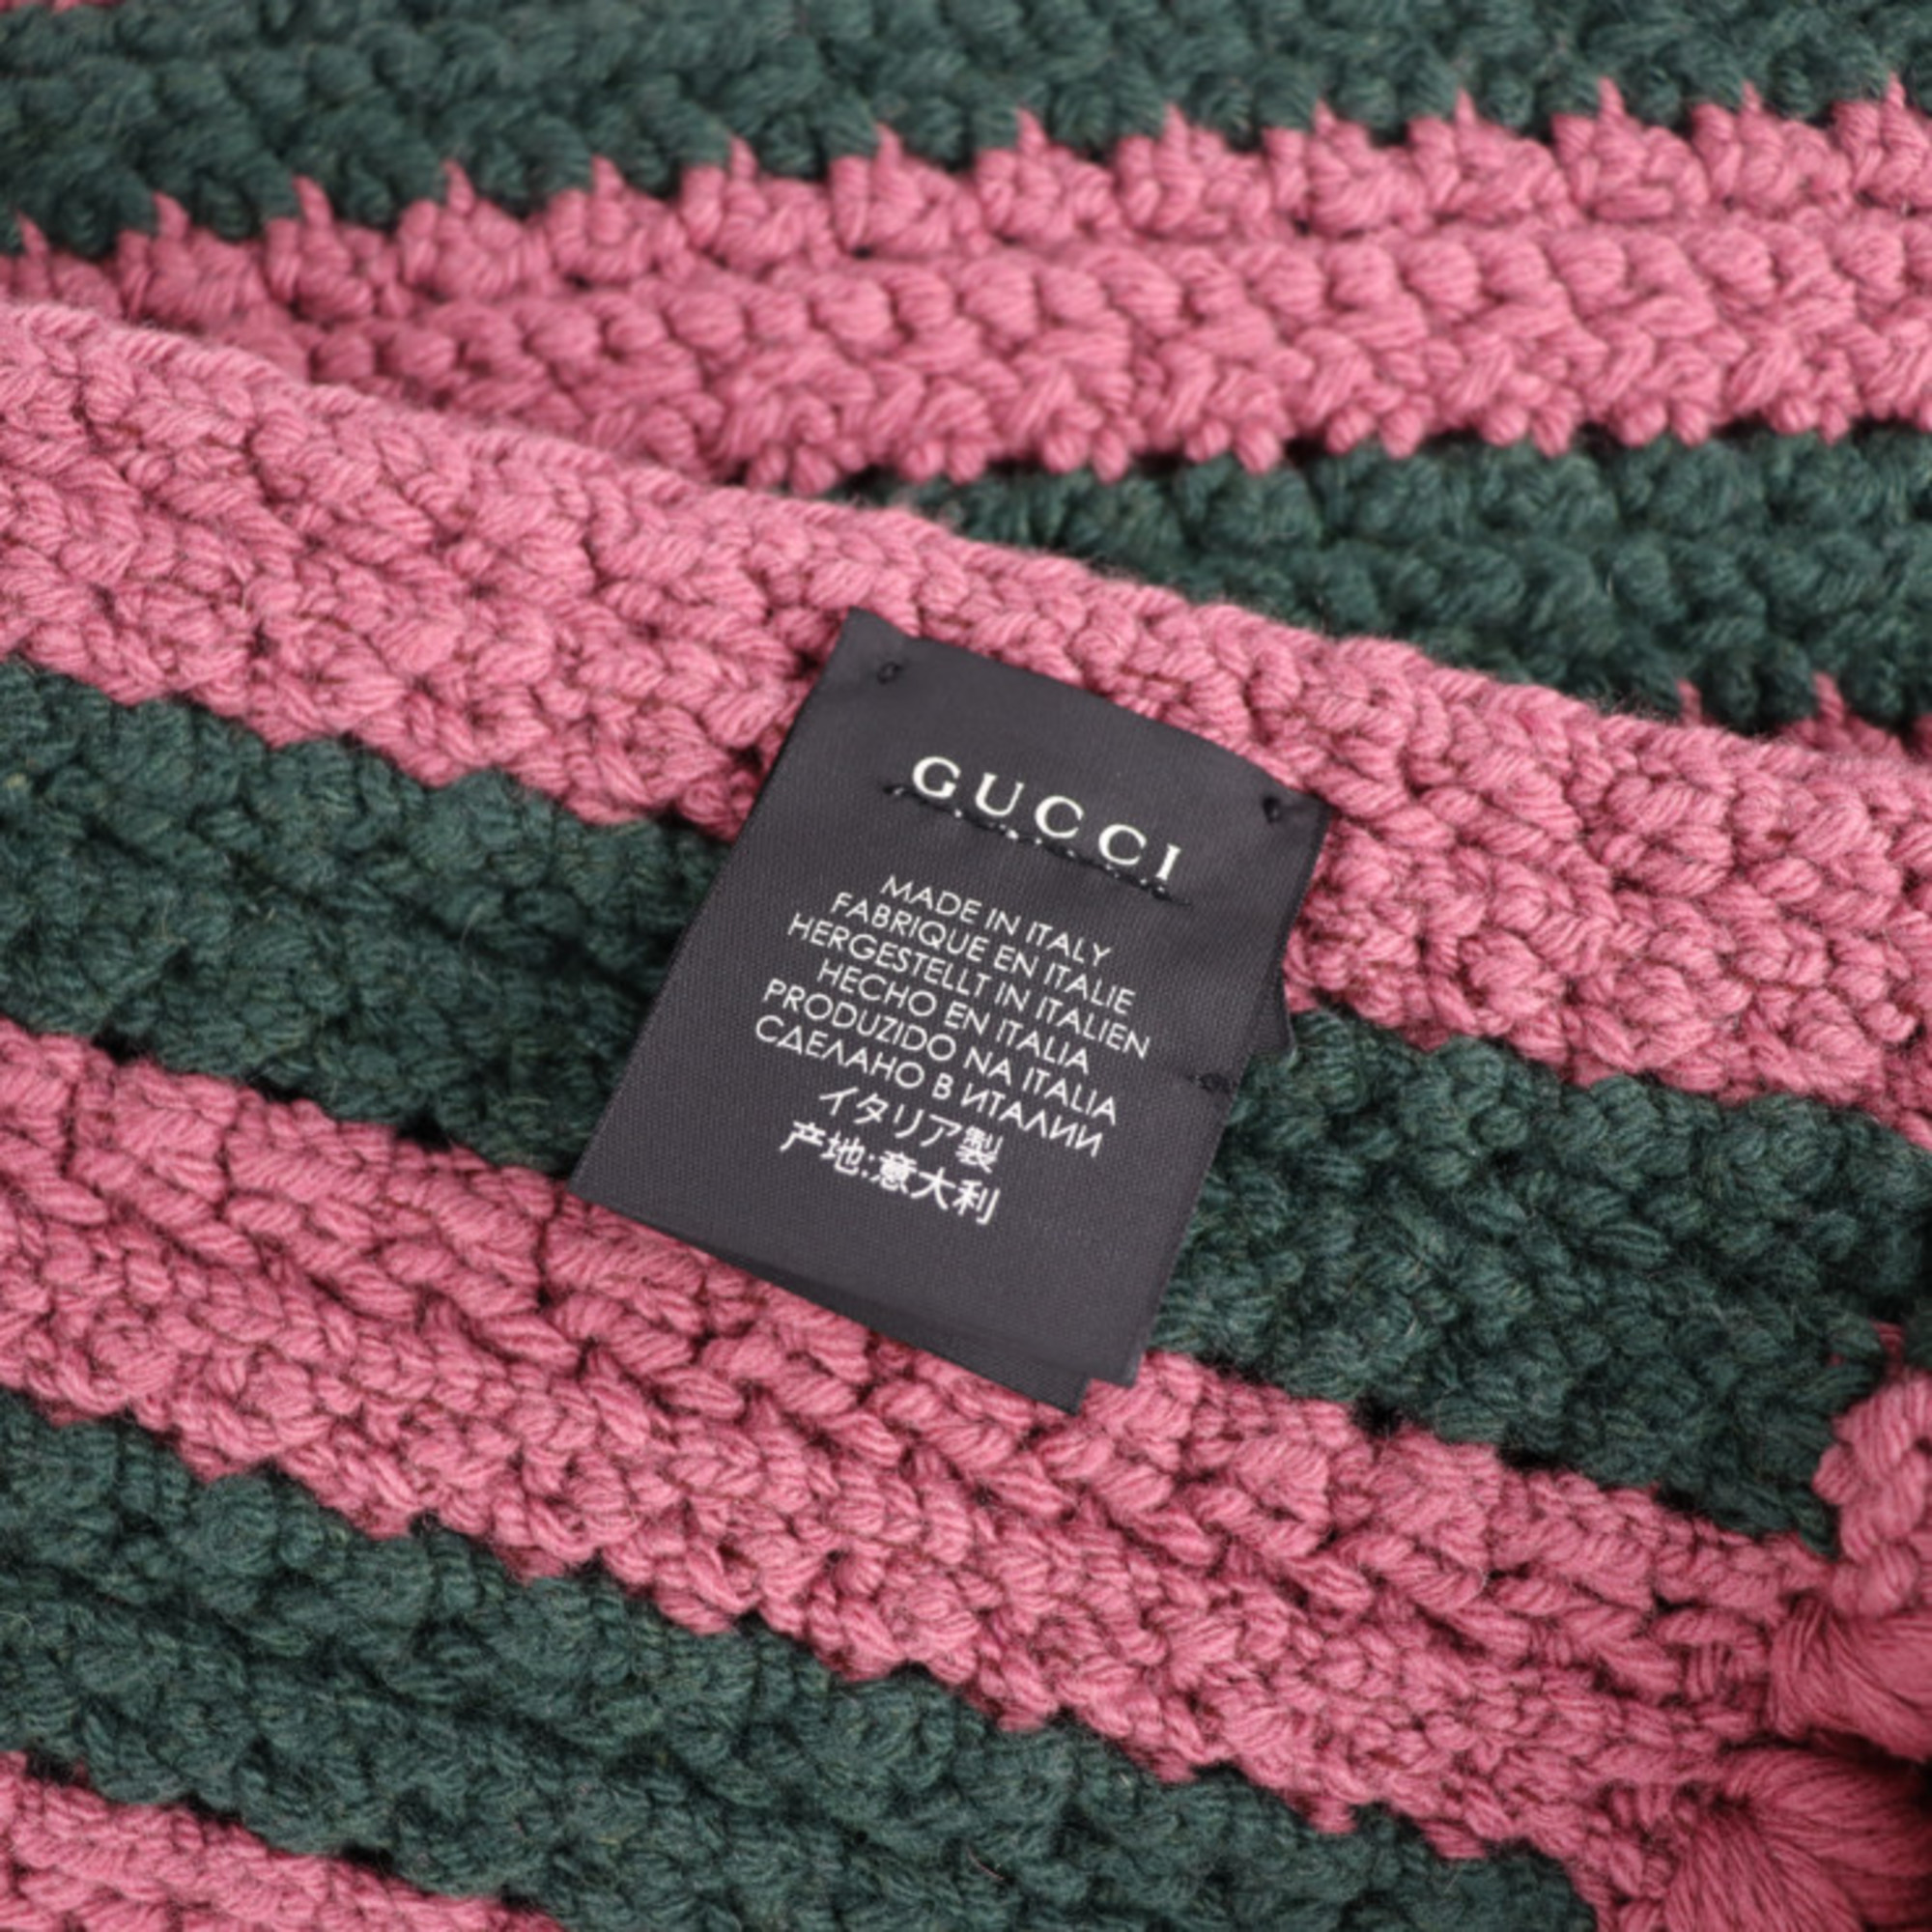 GUCCI Gucci muffler 486216 wool cashmere nylon pink green stripe long